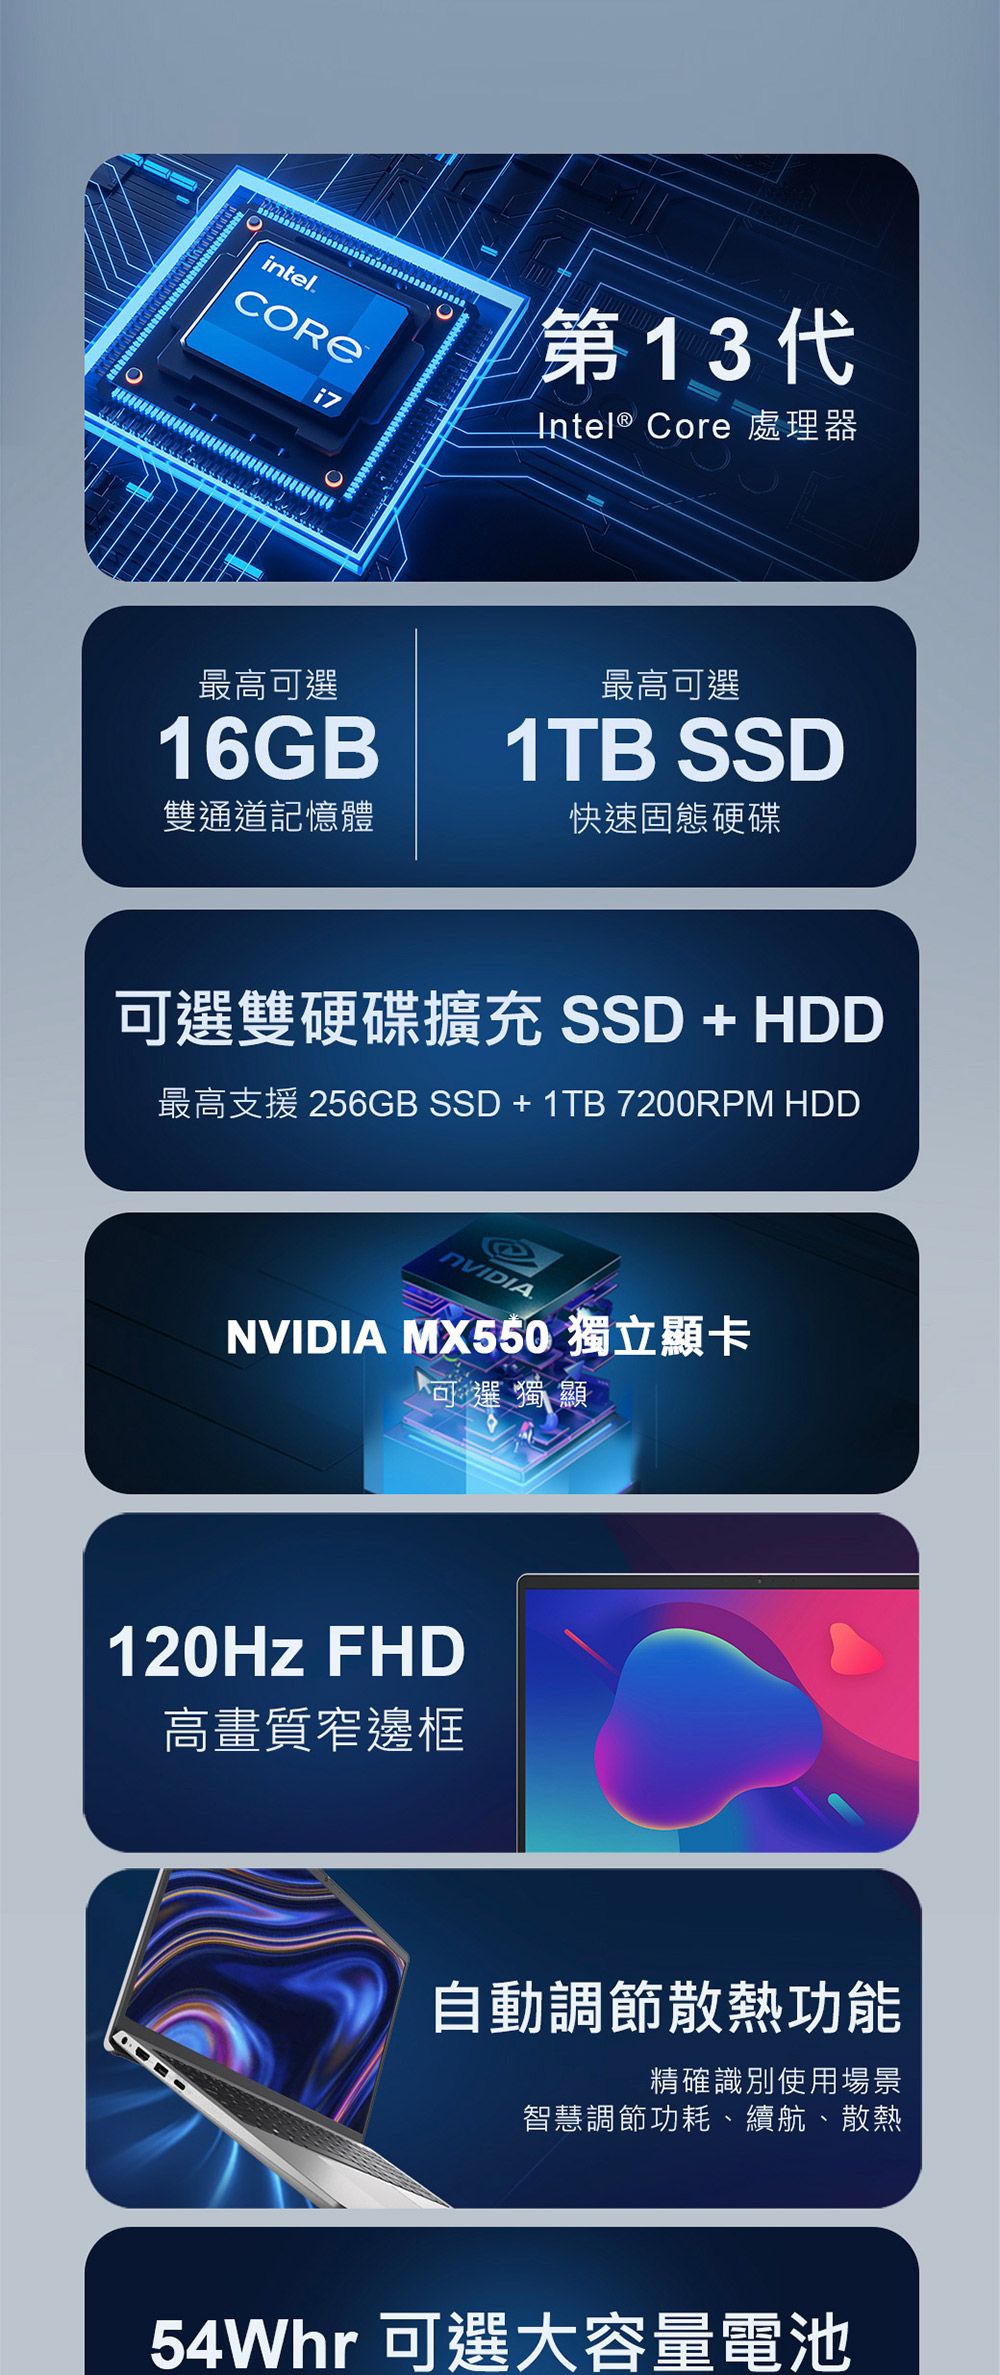 intel.i7第13代Intel® Core 處理器最高可選16GB®最高可選1TB SSD雙通道記憶體快速固態硬碟可選雙硬碟擴充 SSD + HDD最高支援 256GB SSD + 1TB 7200RPM HDD.NVIDIA MX550 獨立顯卡可選獨顯120Hz FHD高畫質窄邊框自動調節散熱功能精確識別使用場景智慧調節功耗、續航、散熱54Whr 可選大容量電池